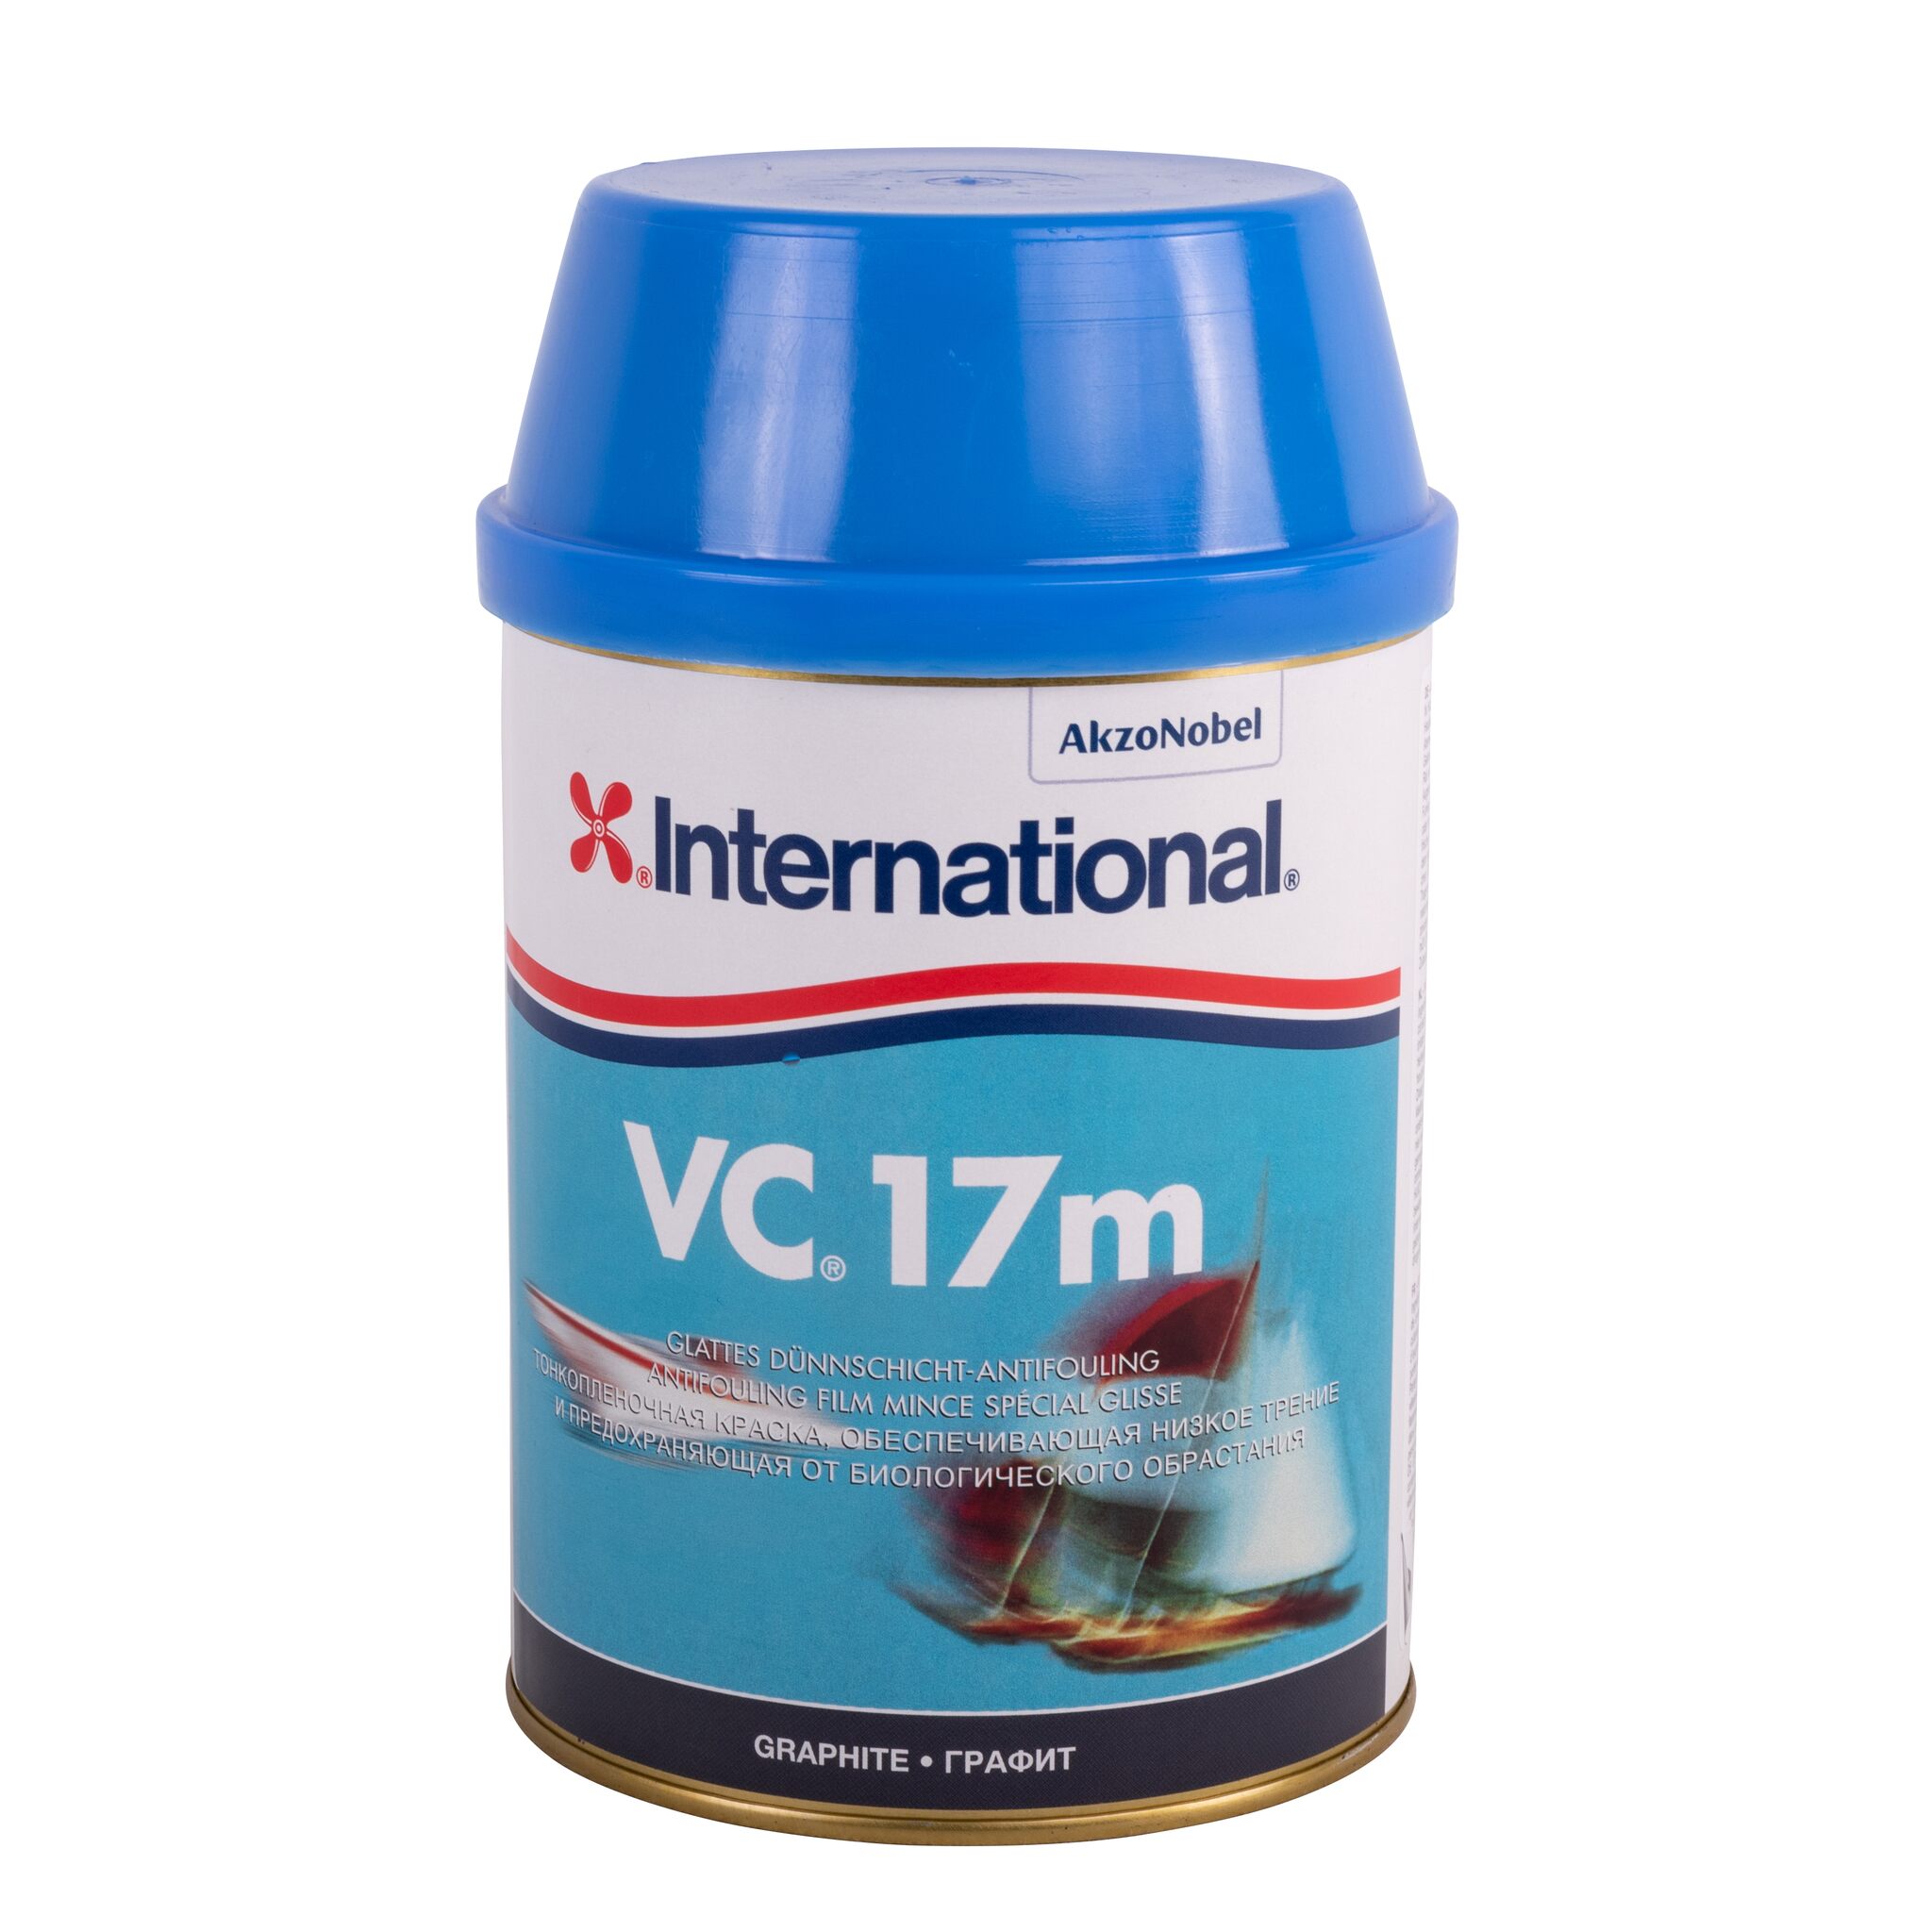 International Antifouling VC 17m